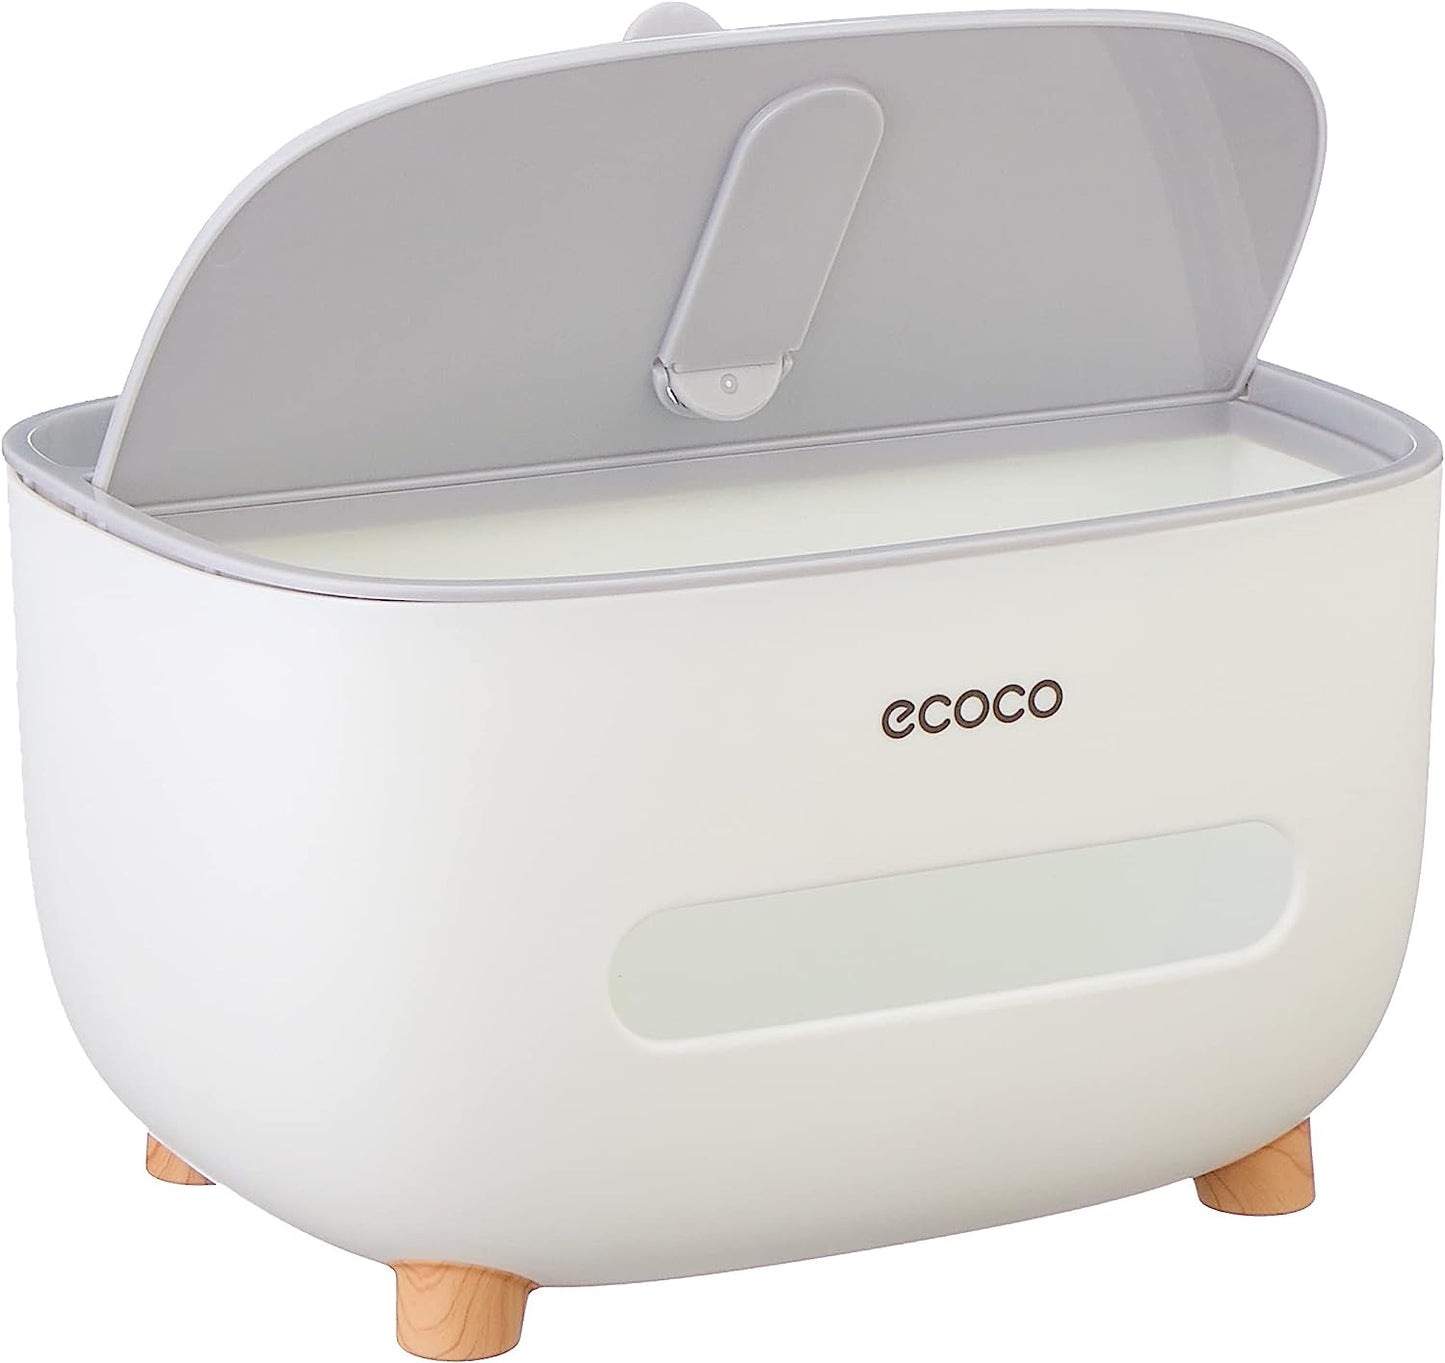 Ecoco Tissue Box and Utensil Holder